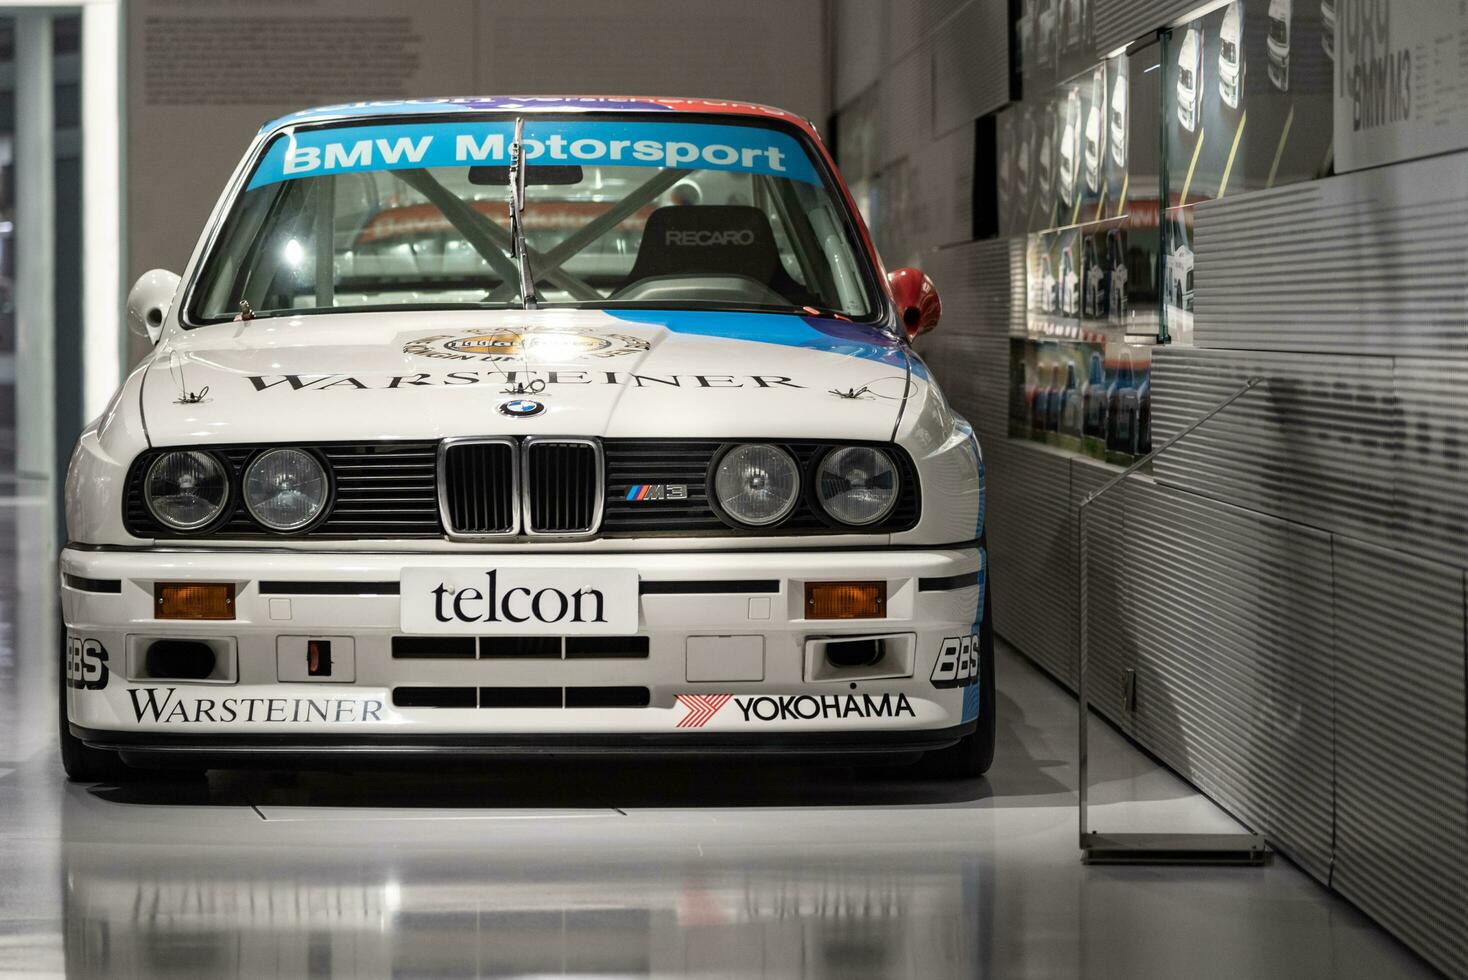 Munich, Alemania - ago 27, 2019 - BMW m3 carreras versión en Munich BMW museo foto